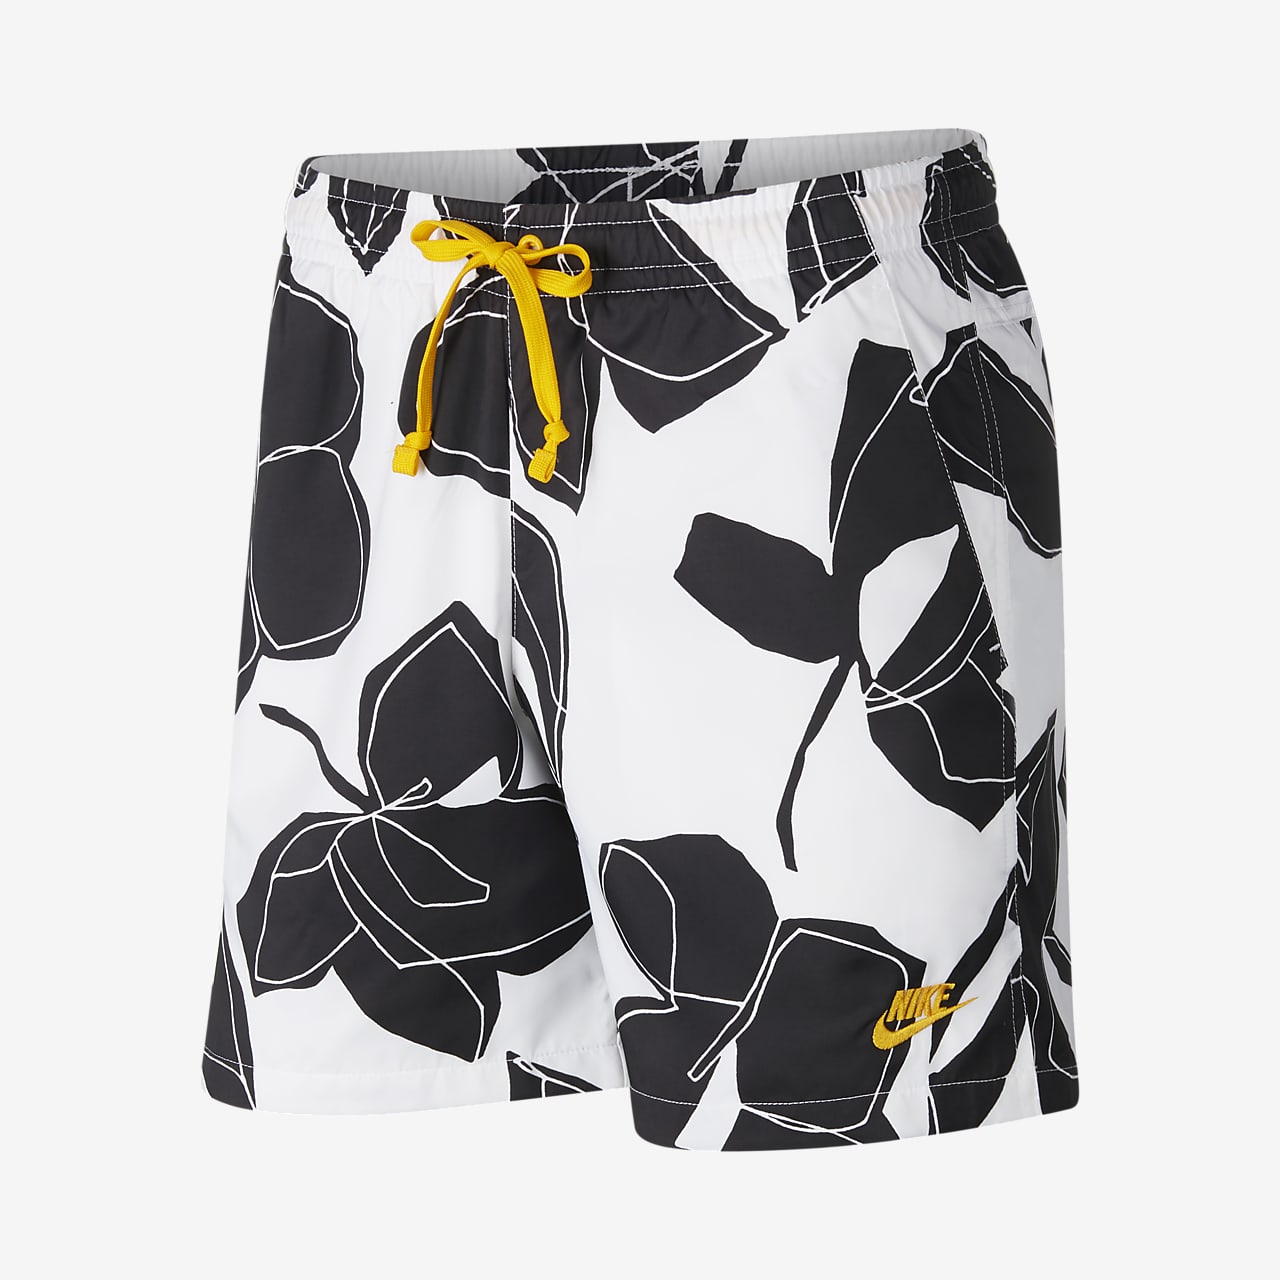 nike floral shorts mens OFF 69%